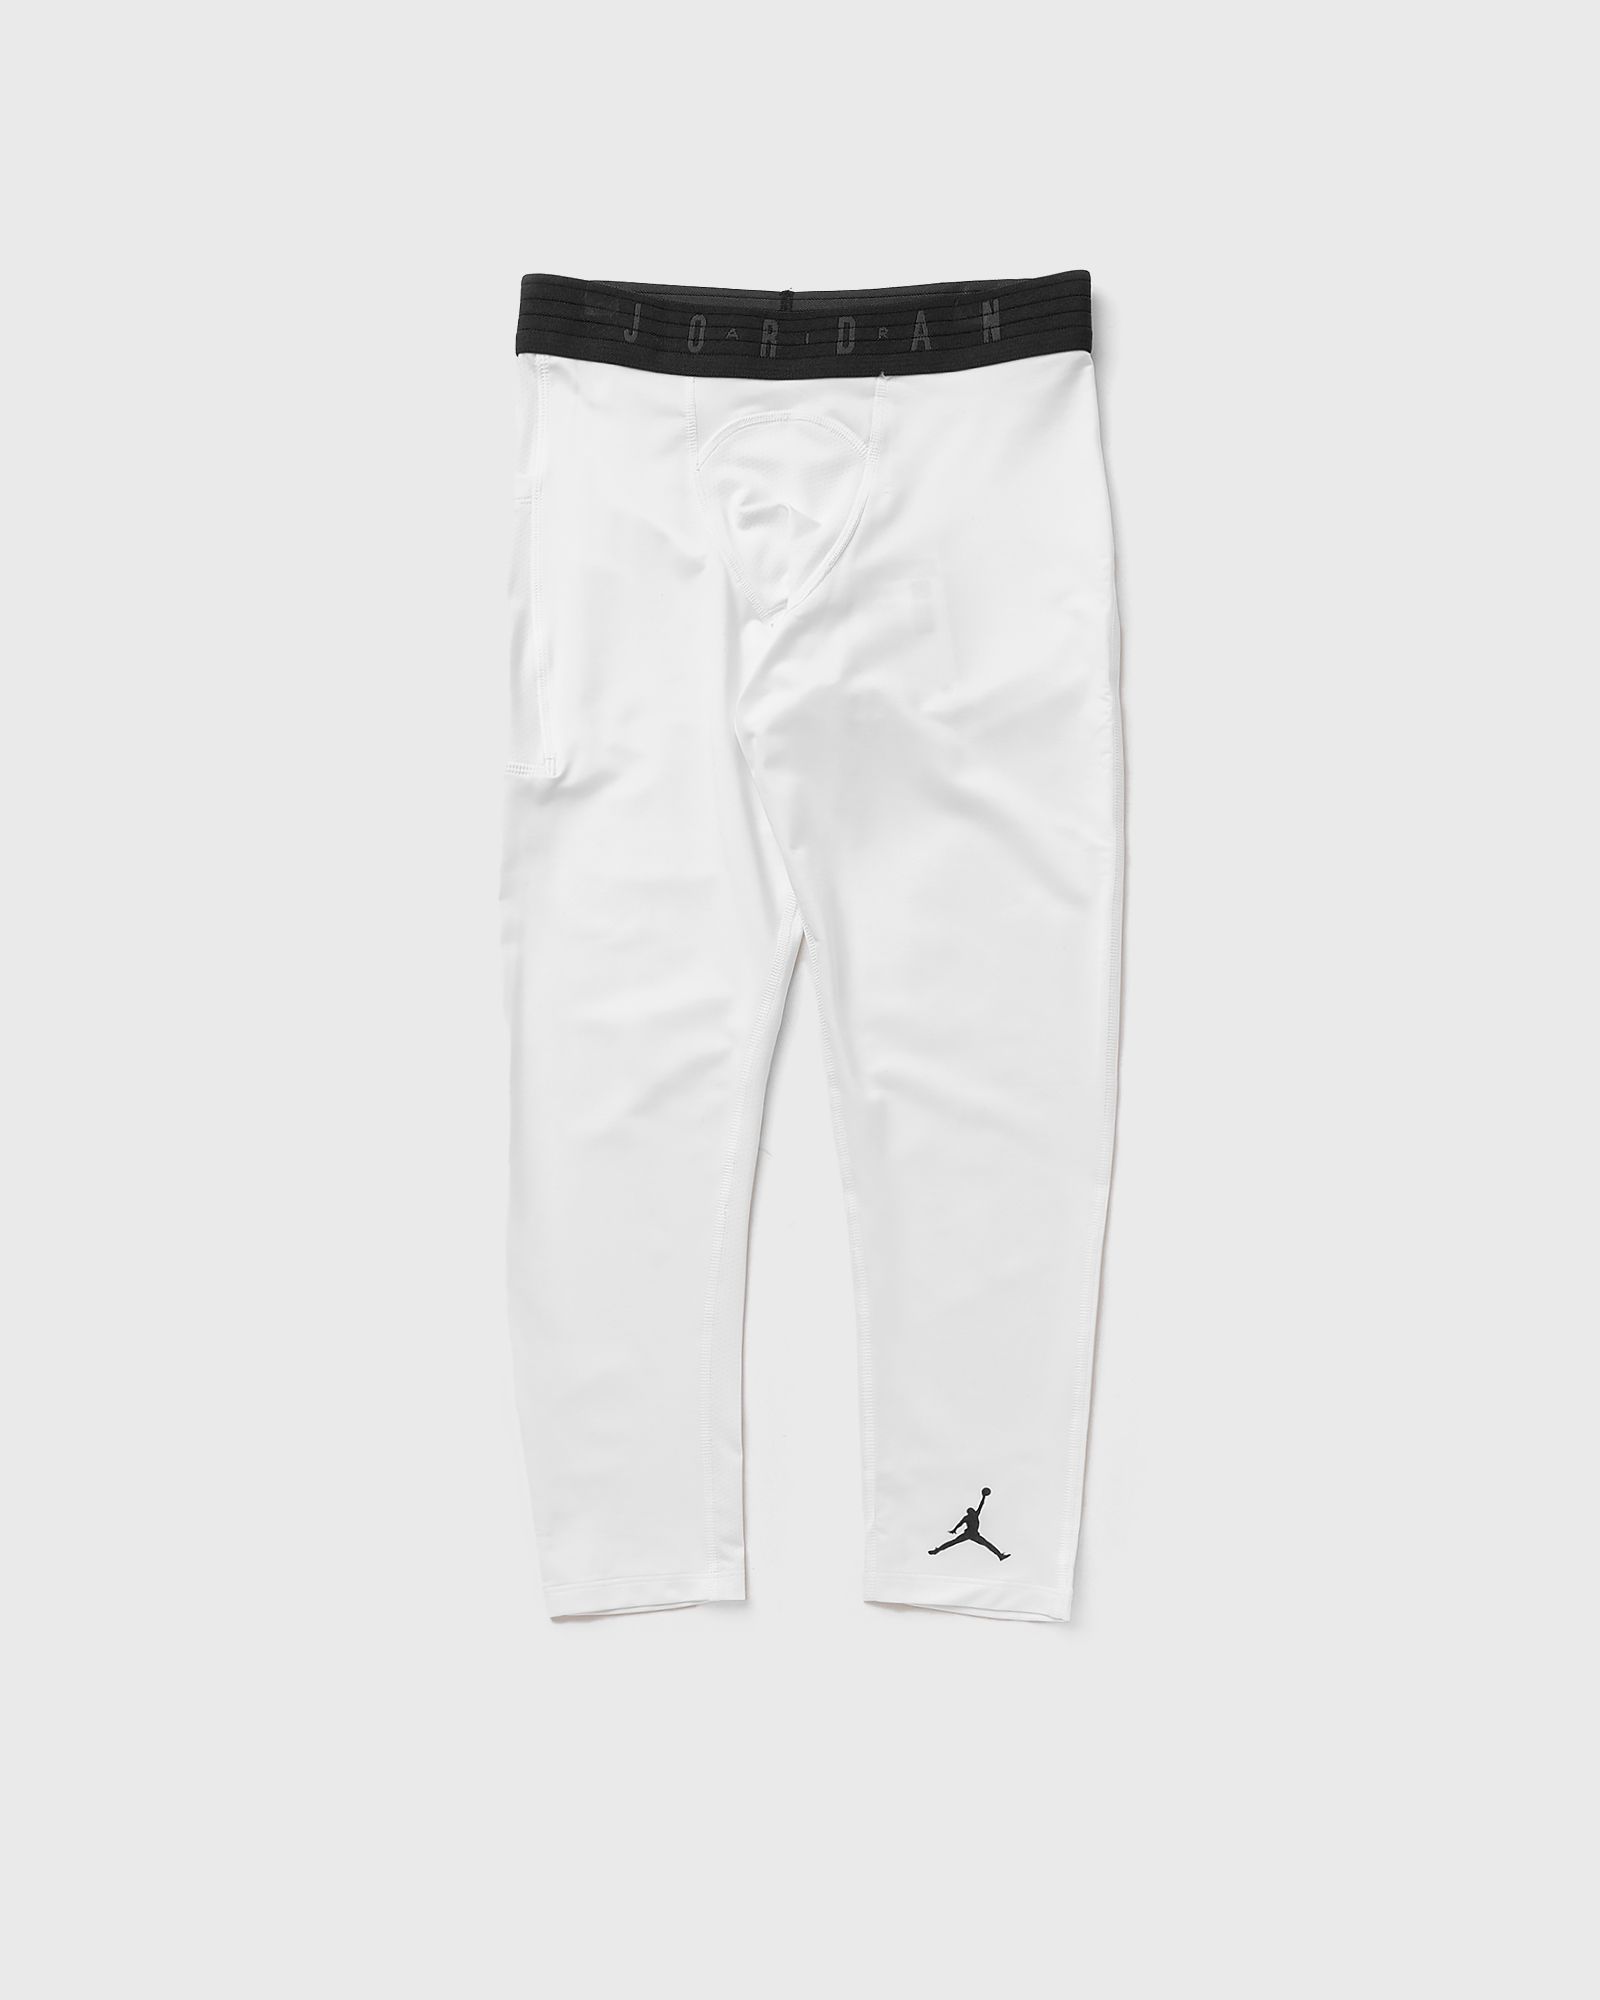 Jordan Sport Dri-FIT 3/4 Tights men Sweatpants white in Größe:M von Jordan